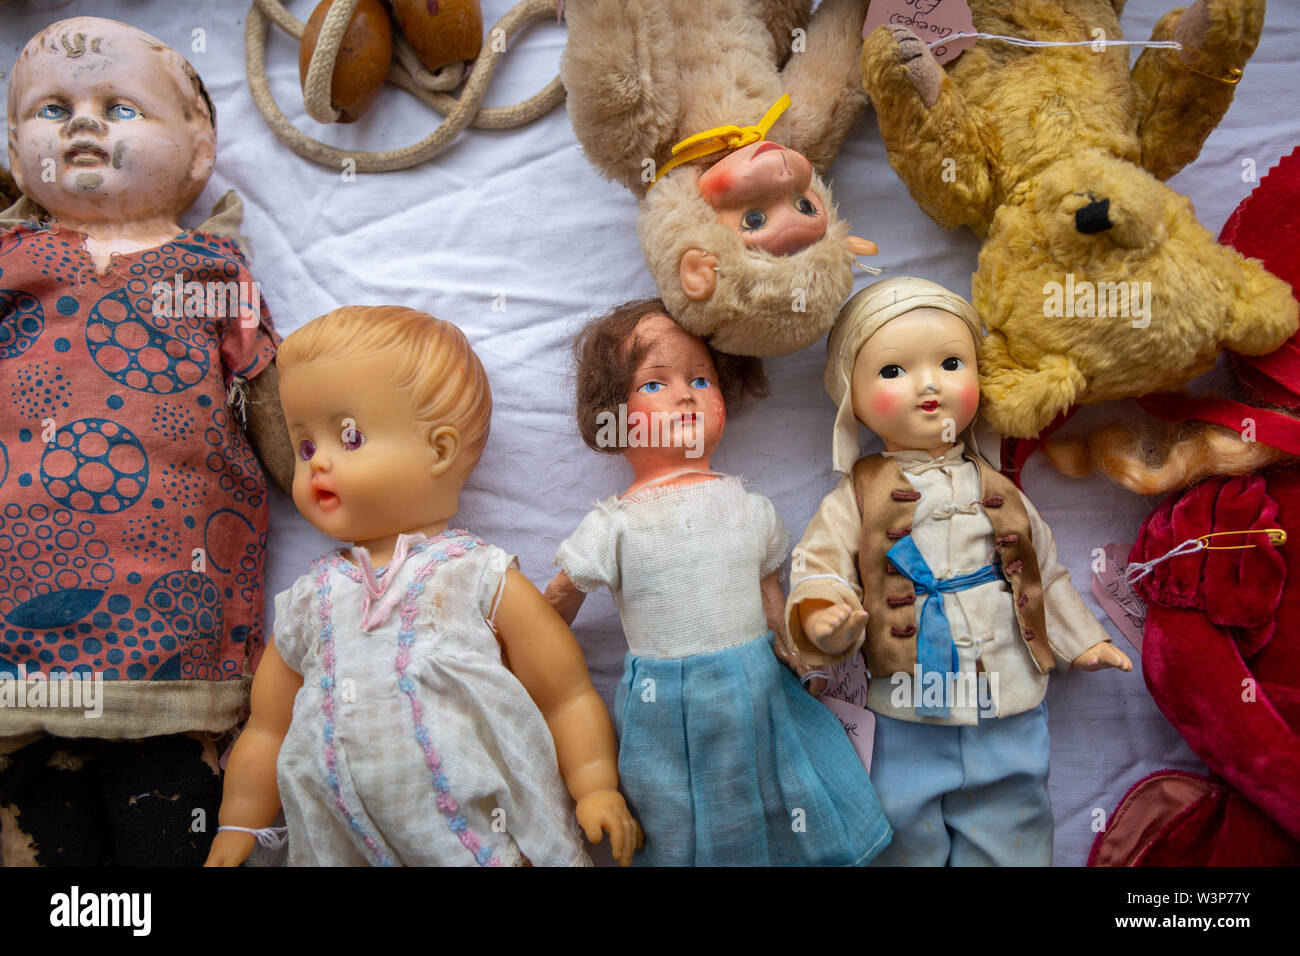 childrens dolls